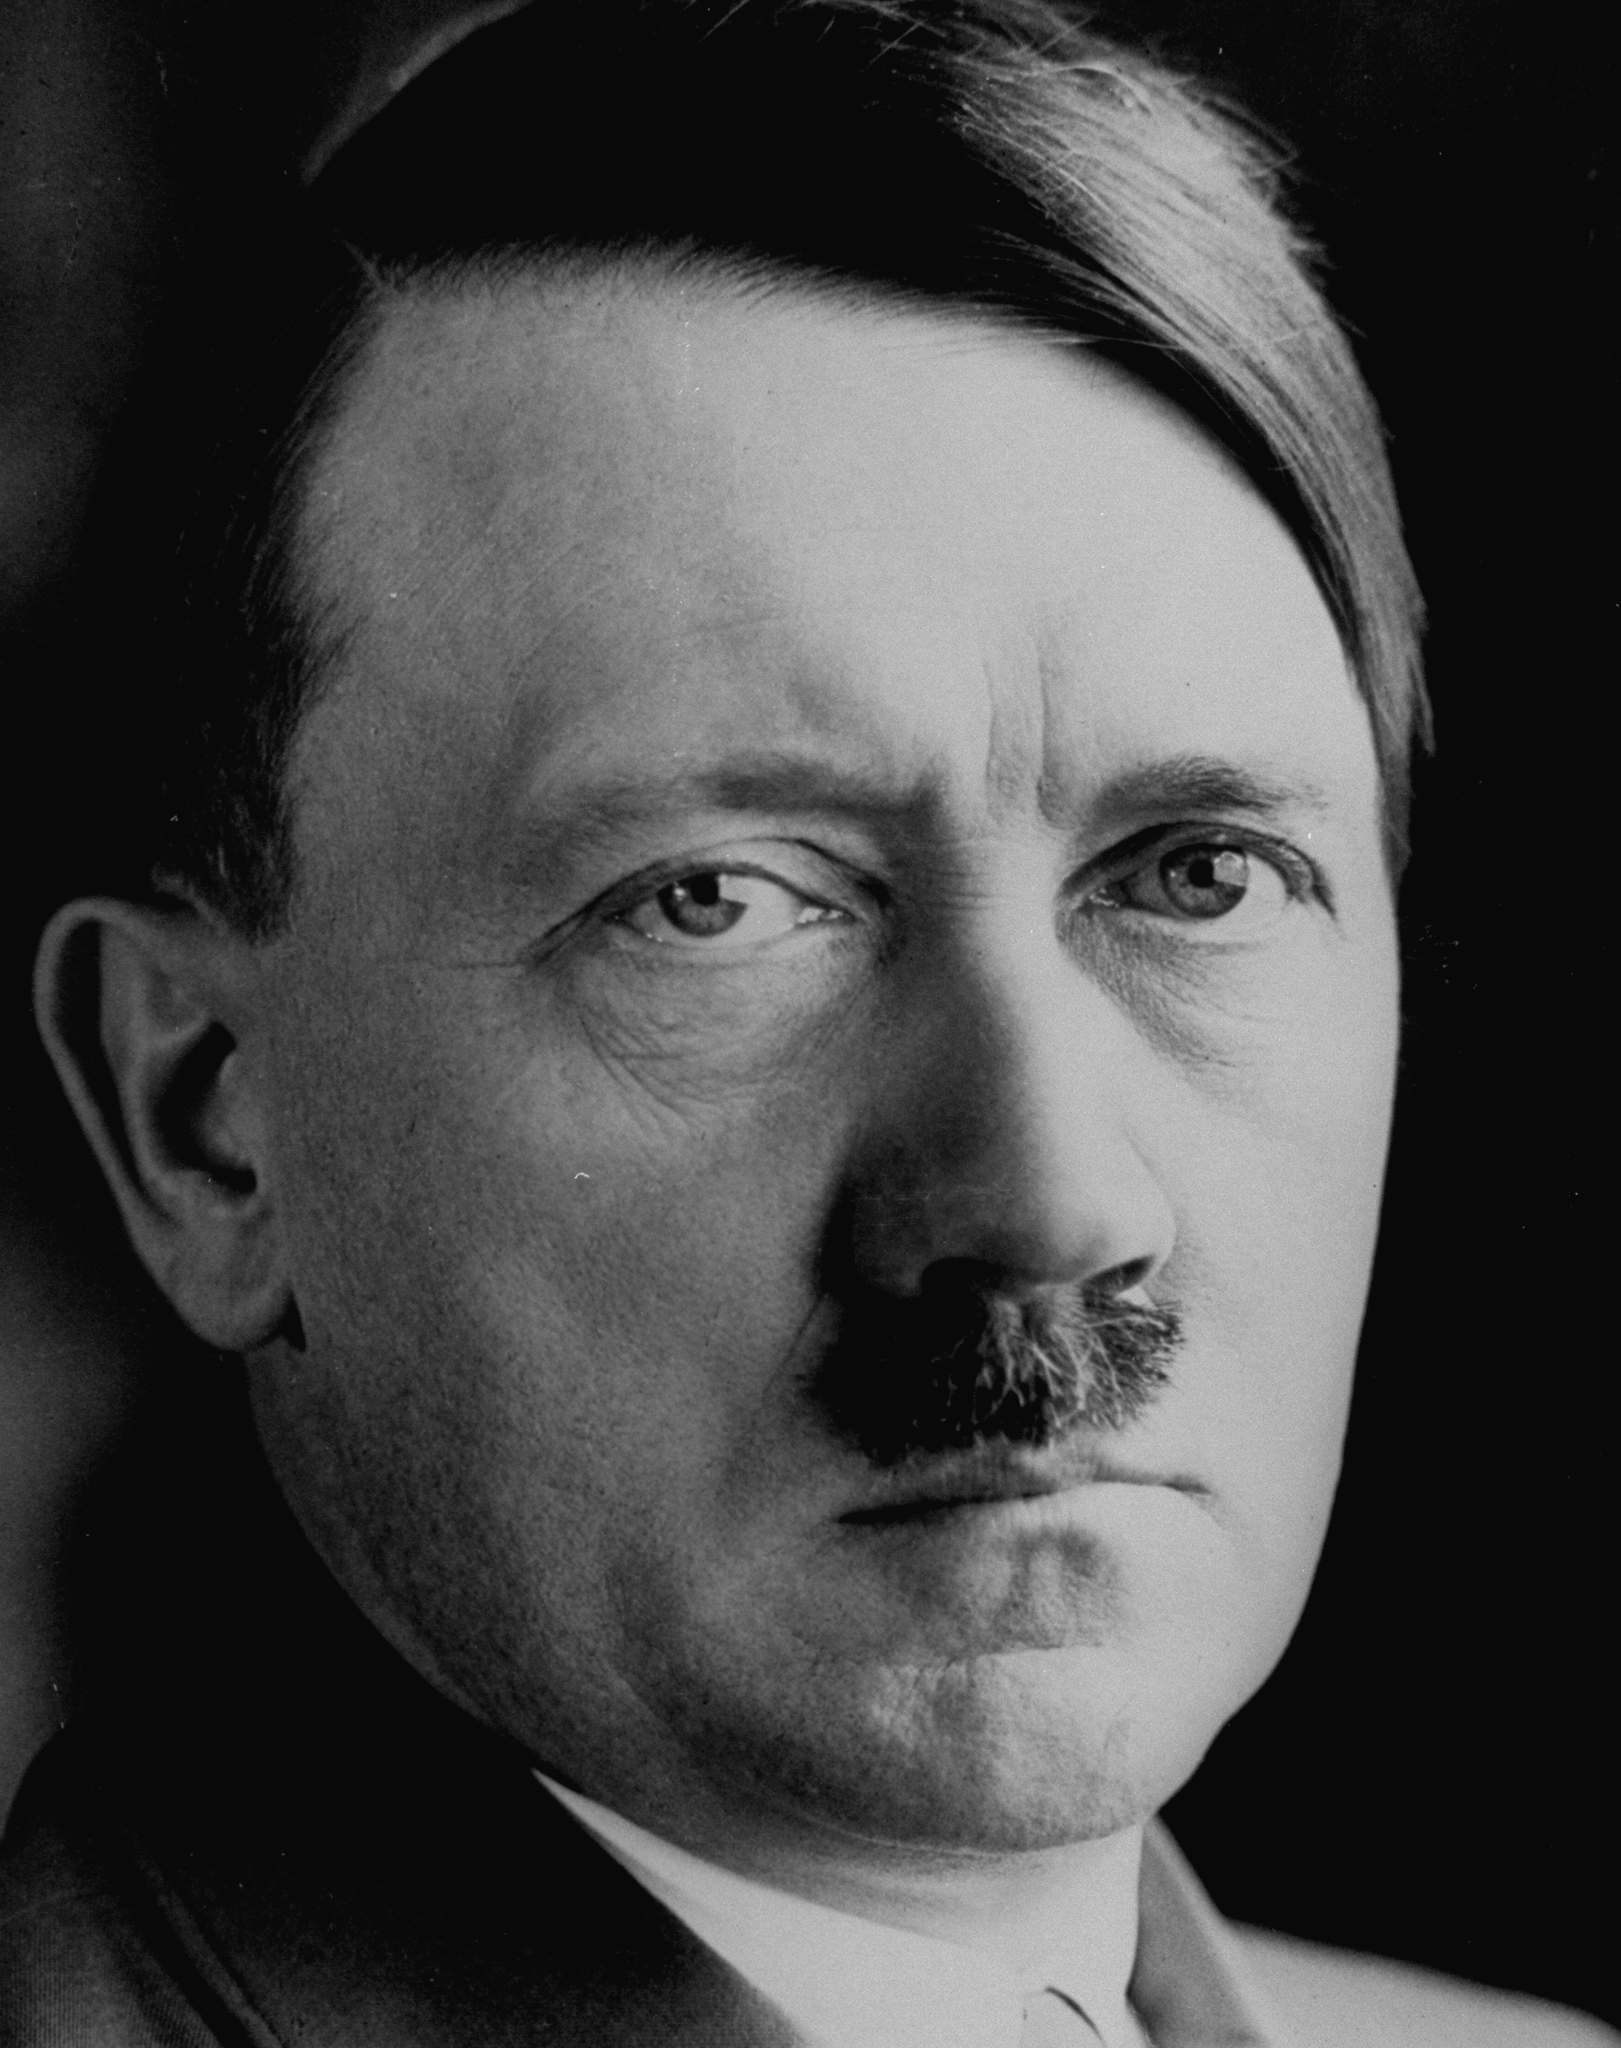 Hitler titkos magánélete a Spektrumon - Blikk